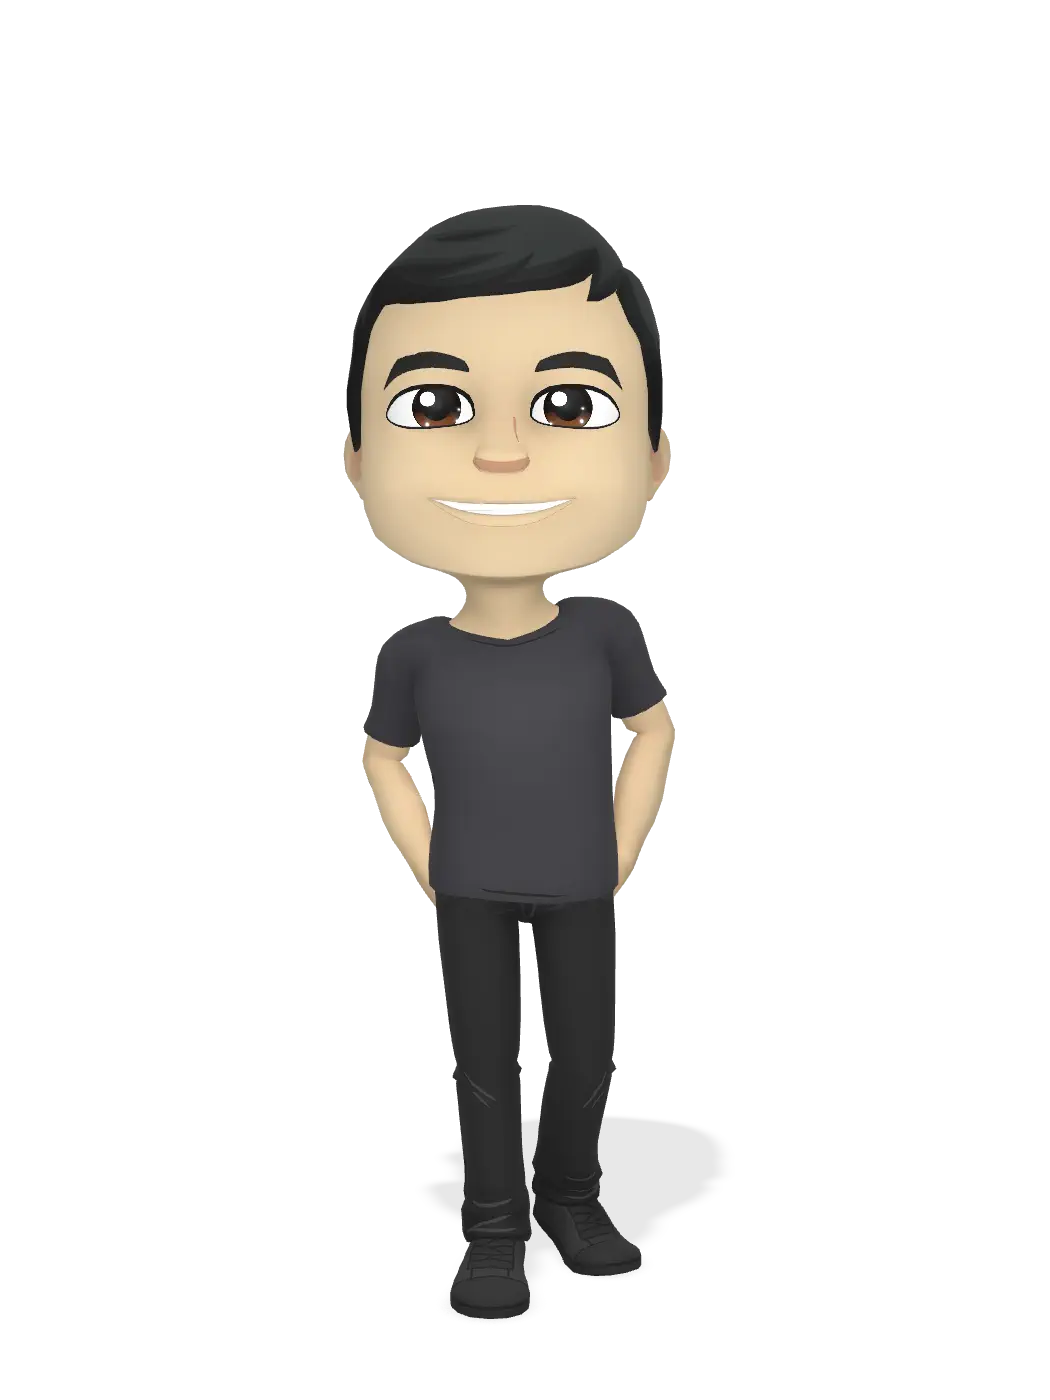 3D Bitmoji for hackapreneur avatar